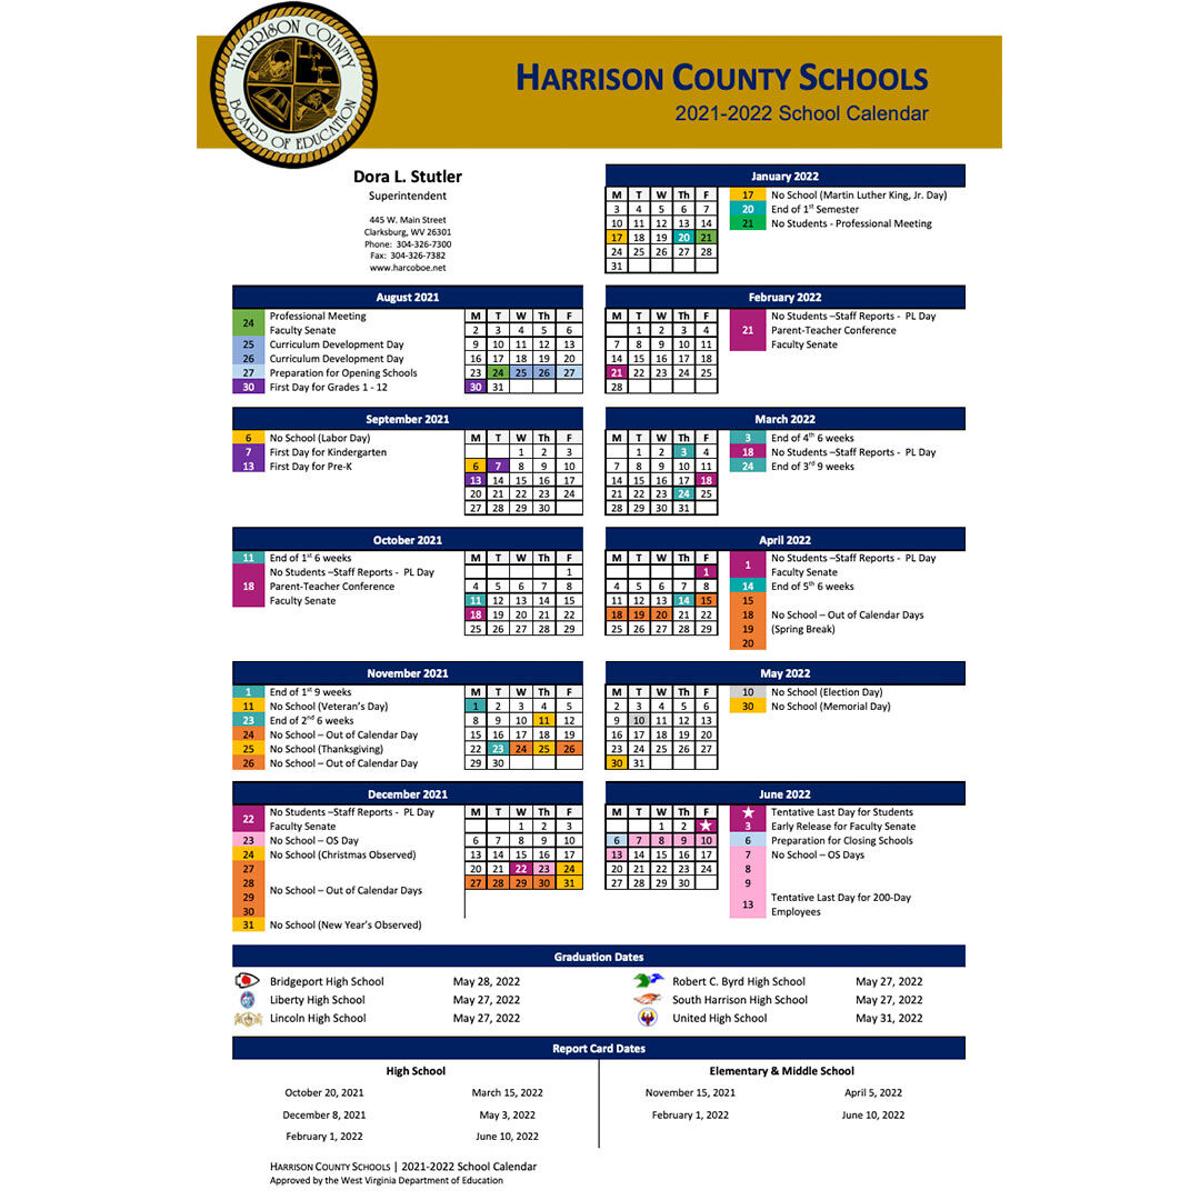 Hcbe Calendar 2022 Harrison County Schools Academic Calendar 2021-22 | Wv News | Wvnews.com